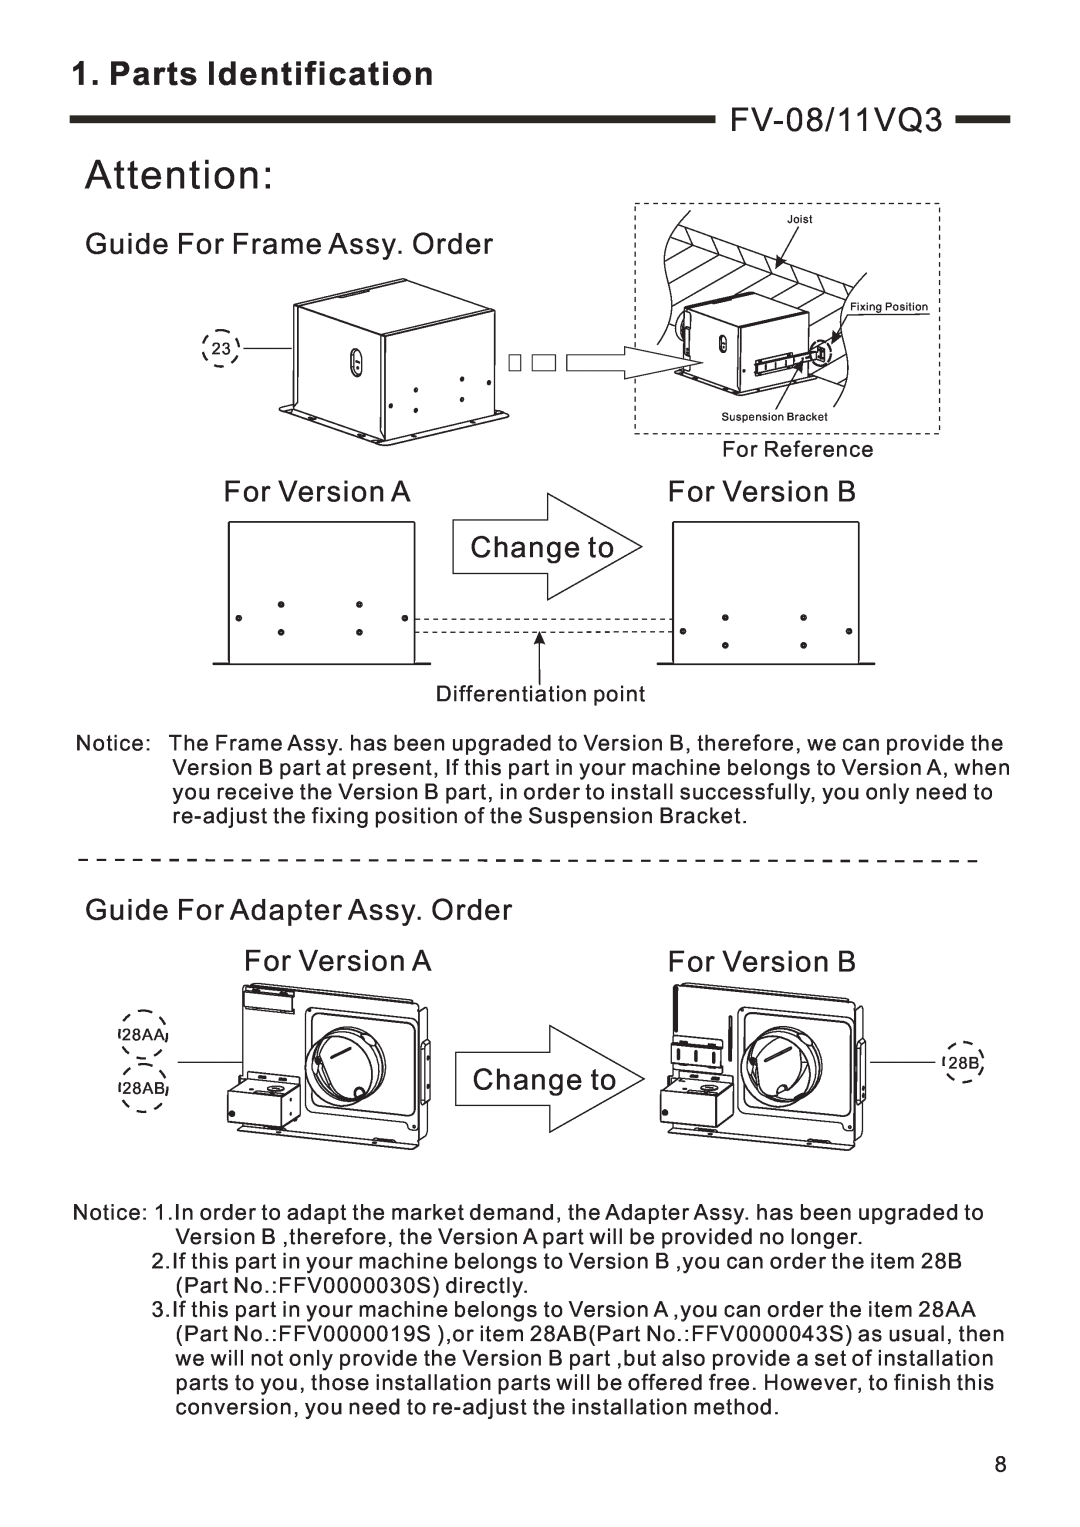 Panasonic FV-11VQ3, FV-15VQ4, FV-08VQ3 FV-08/11VQ3, Guide For Frame Assy. Order, For Version A, For Version B, Change to 